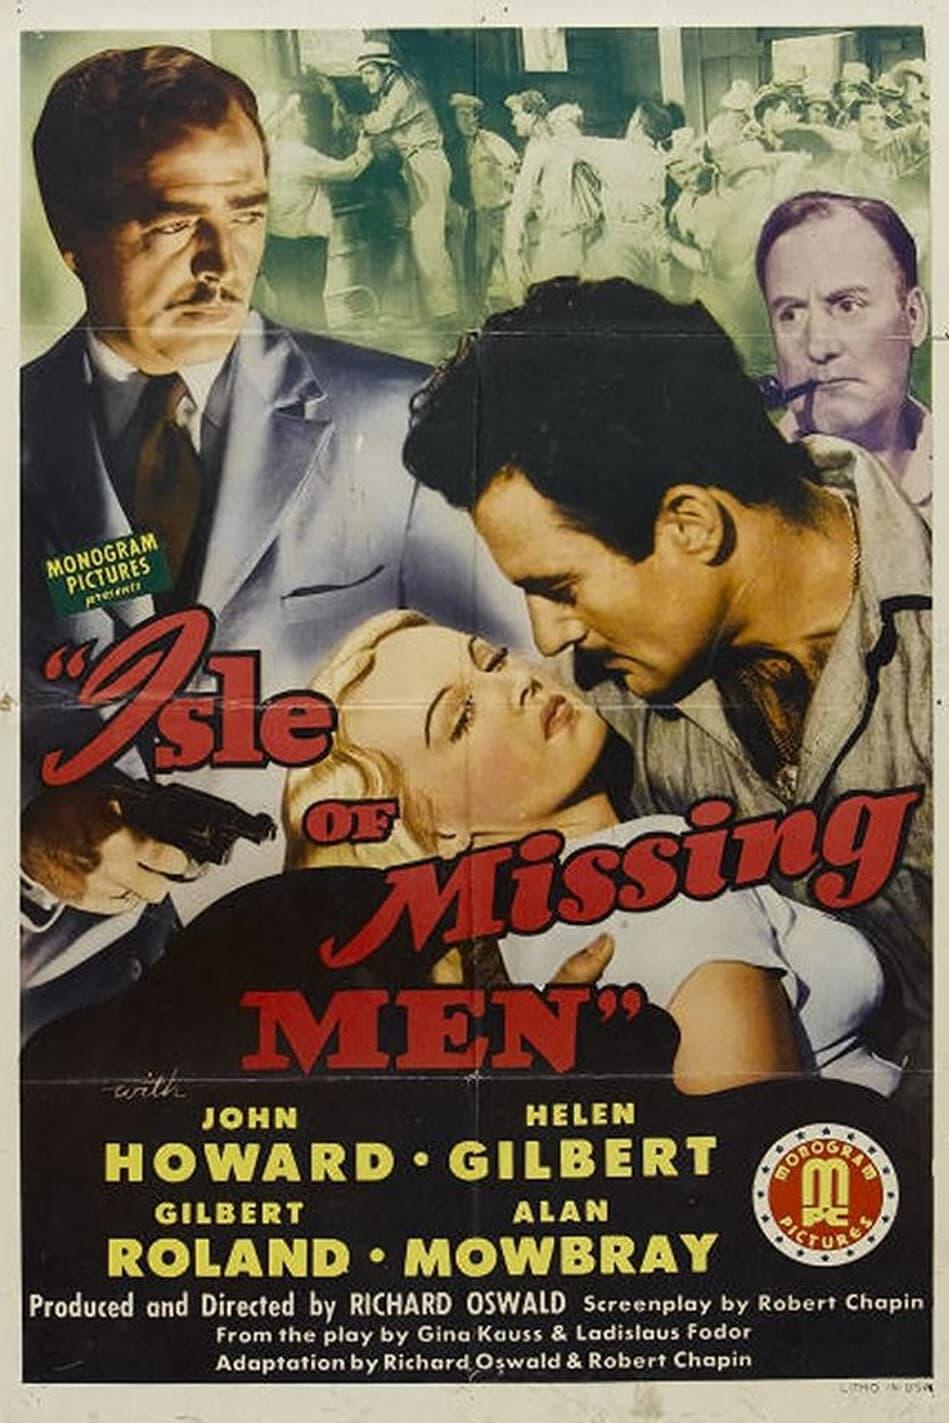 Isle of Missing Men poster